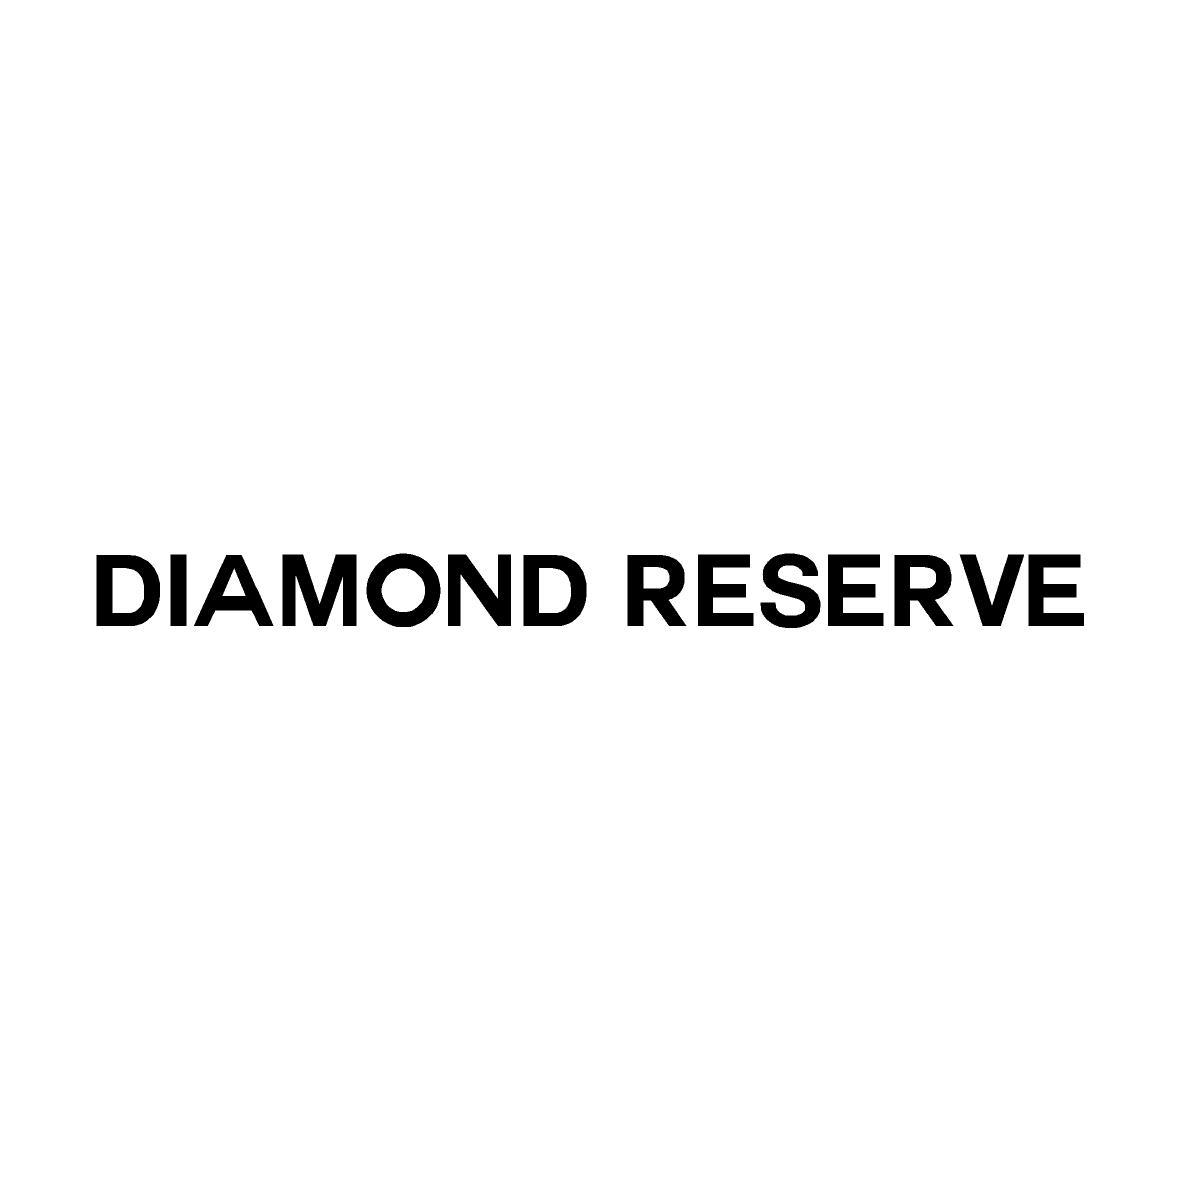 DIAMOND RESERVE